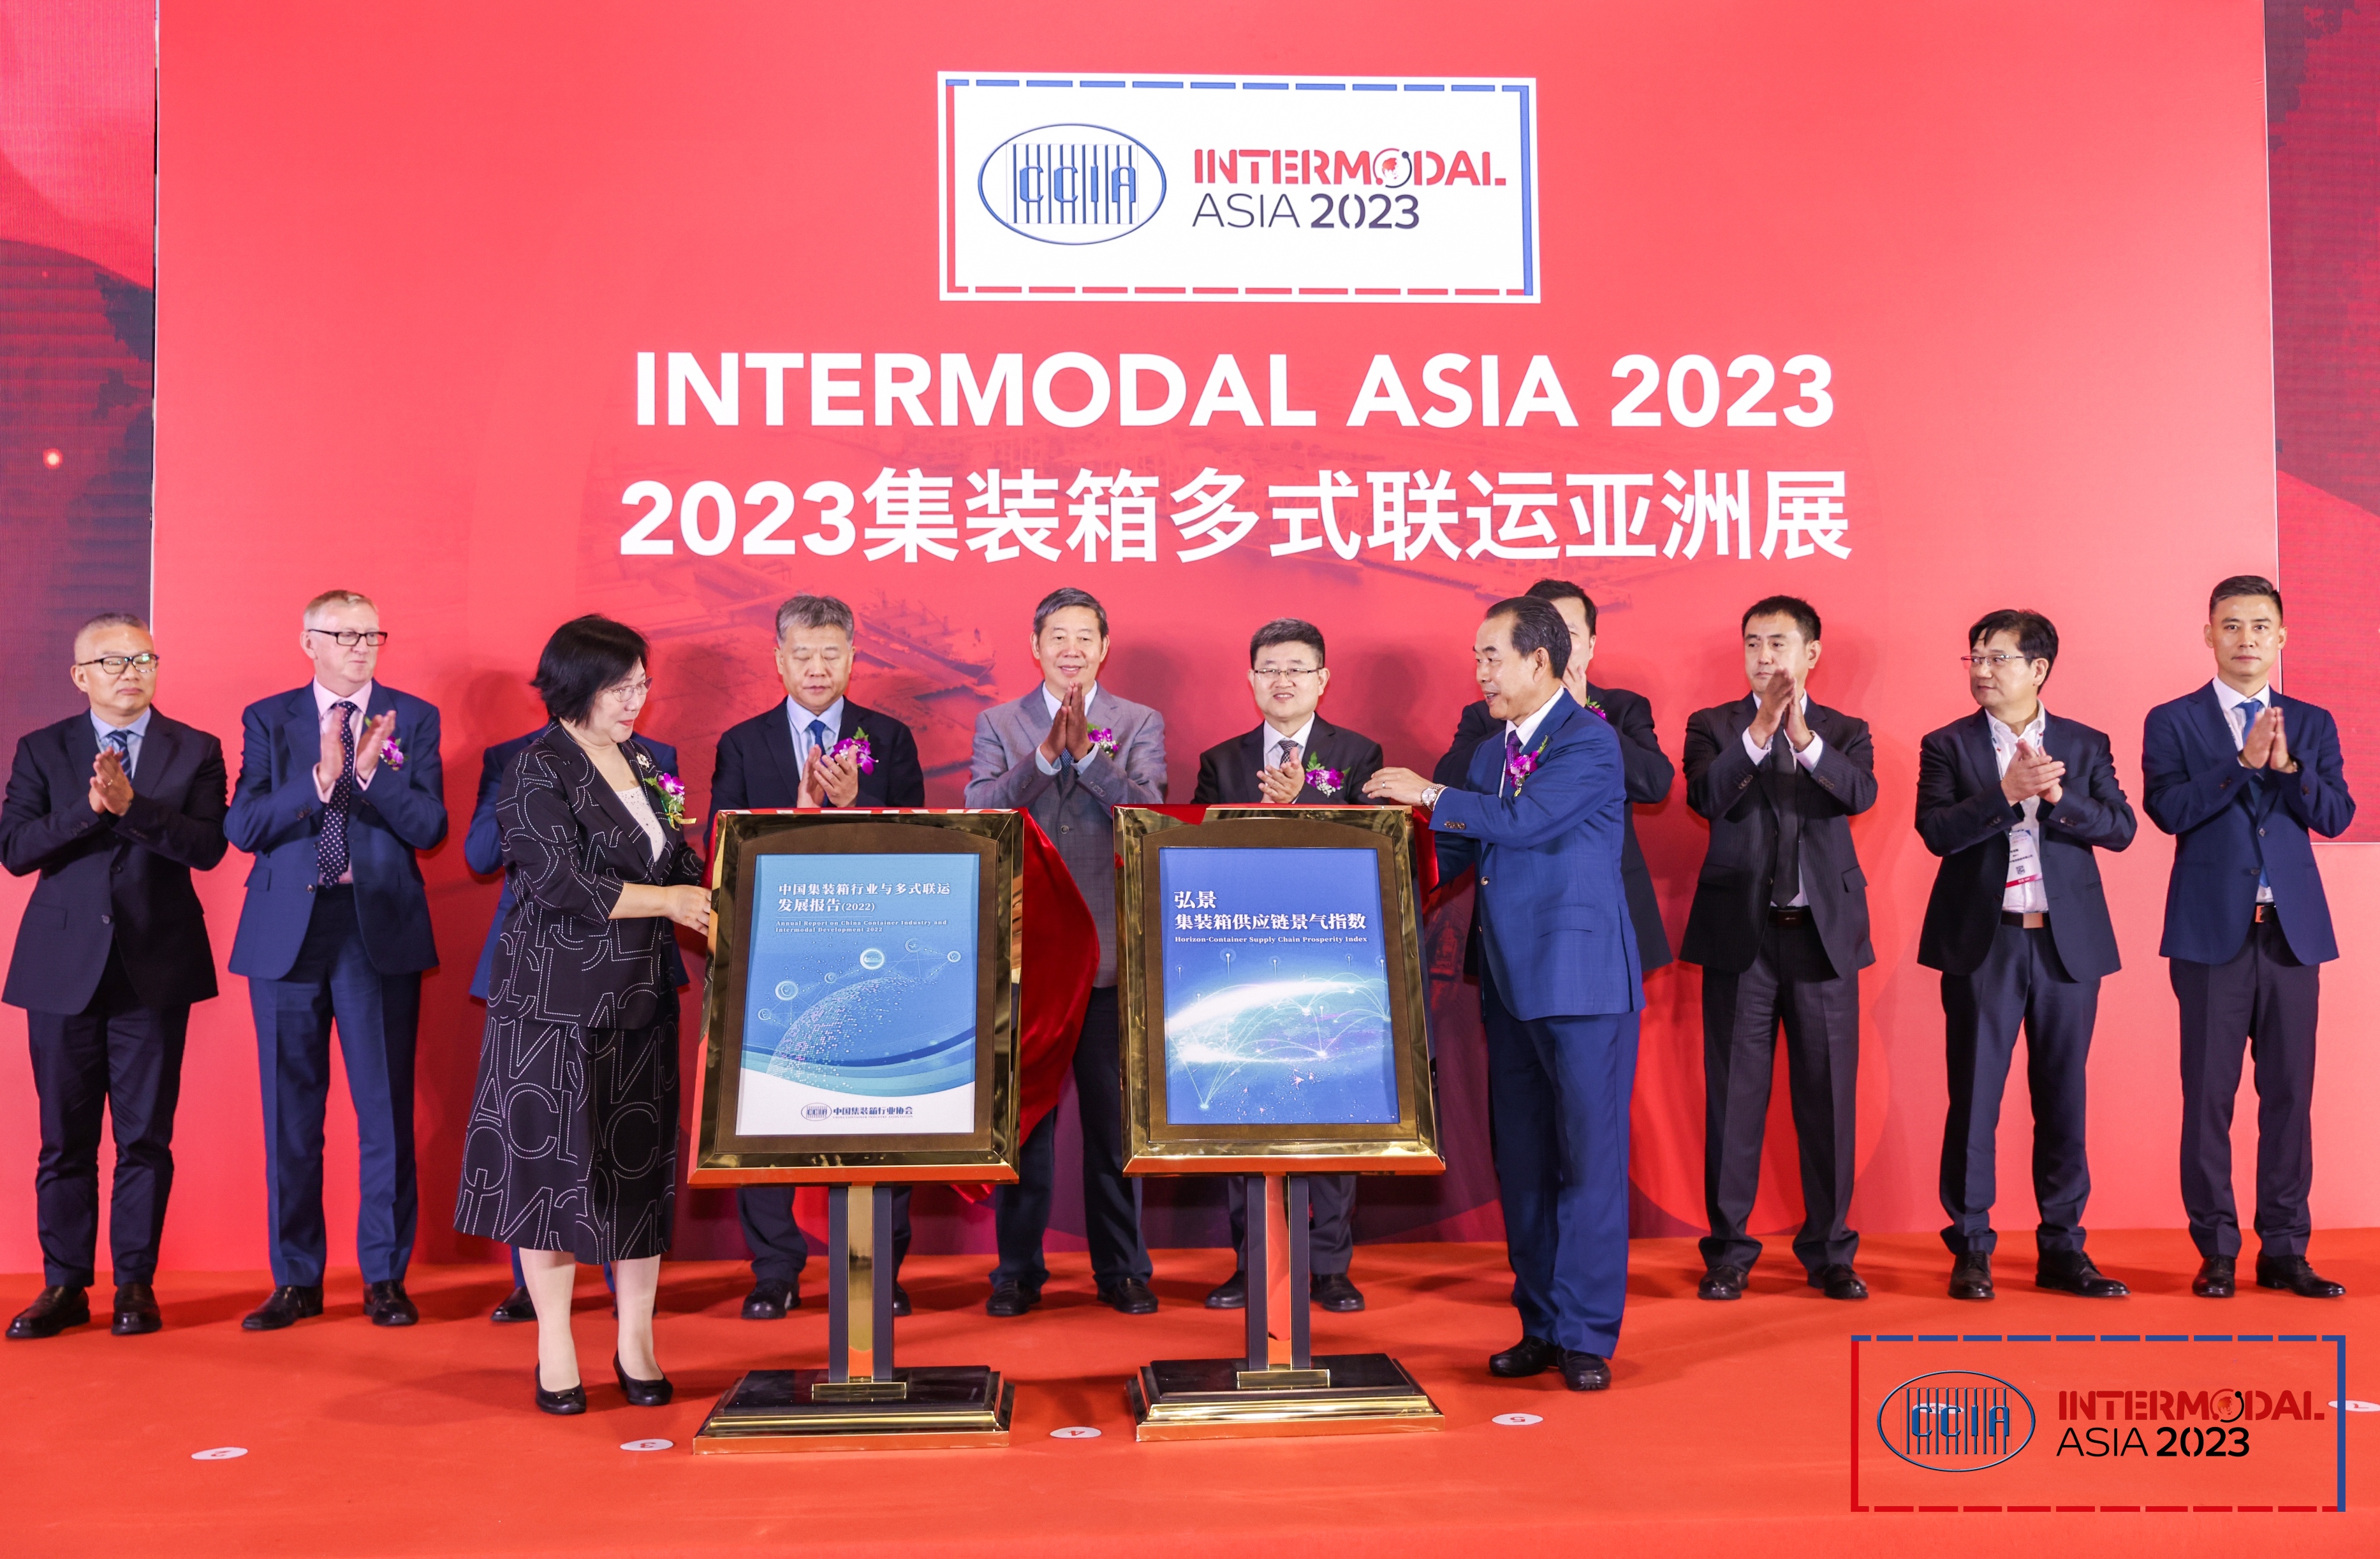 Intermodal Asia 2023 Opening Ceremony